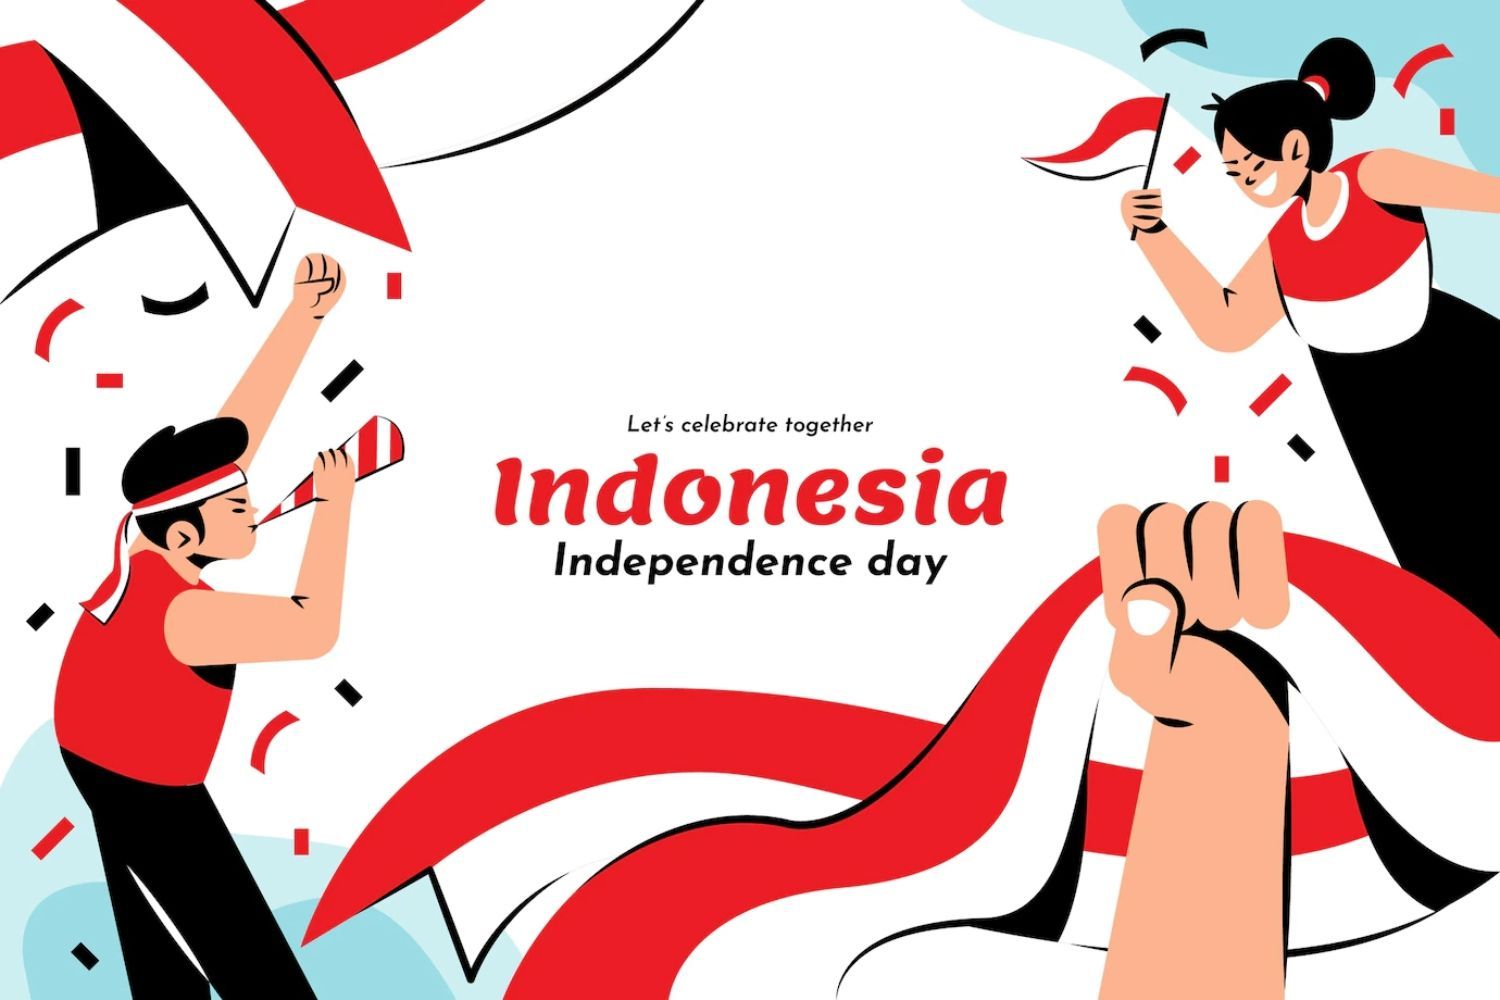 kata kata kemerdekaan indonesia